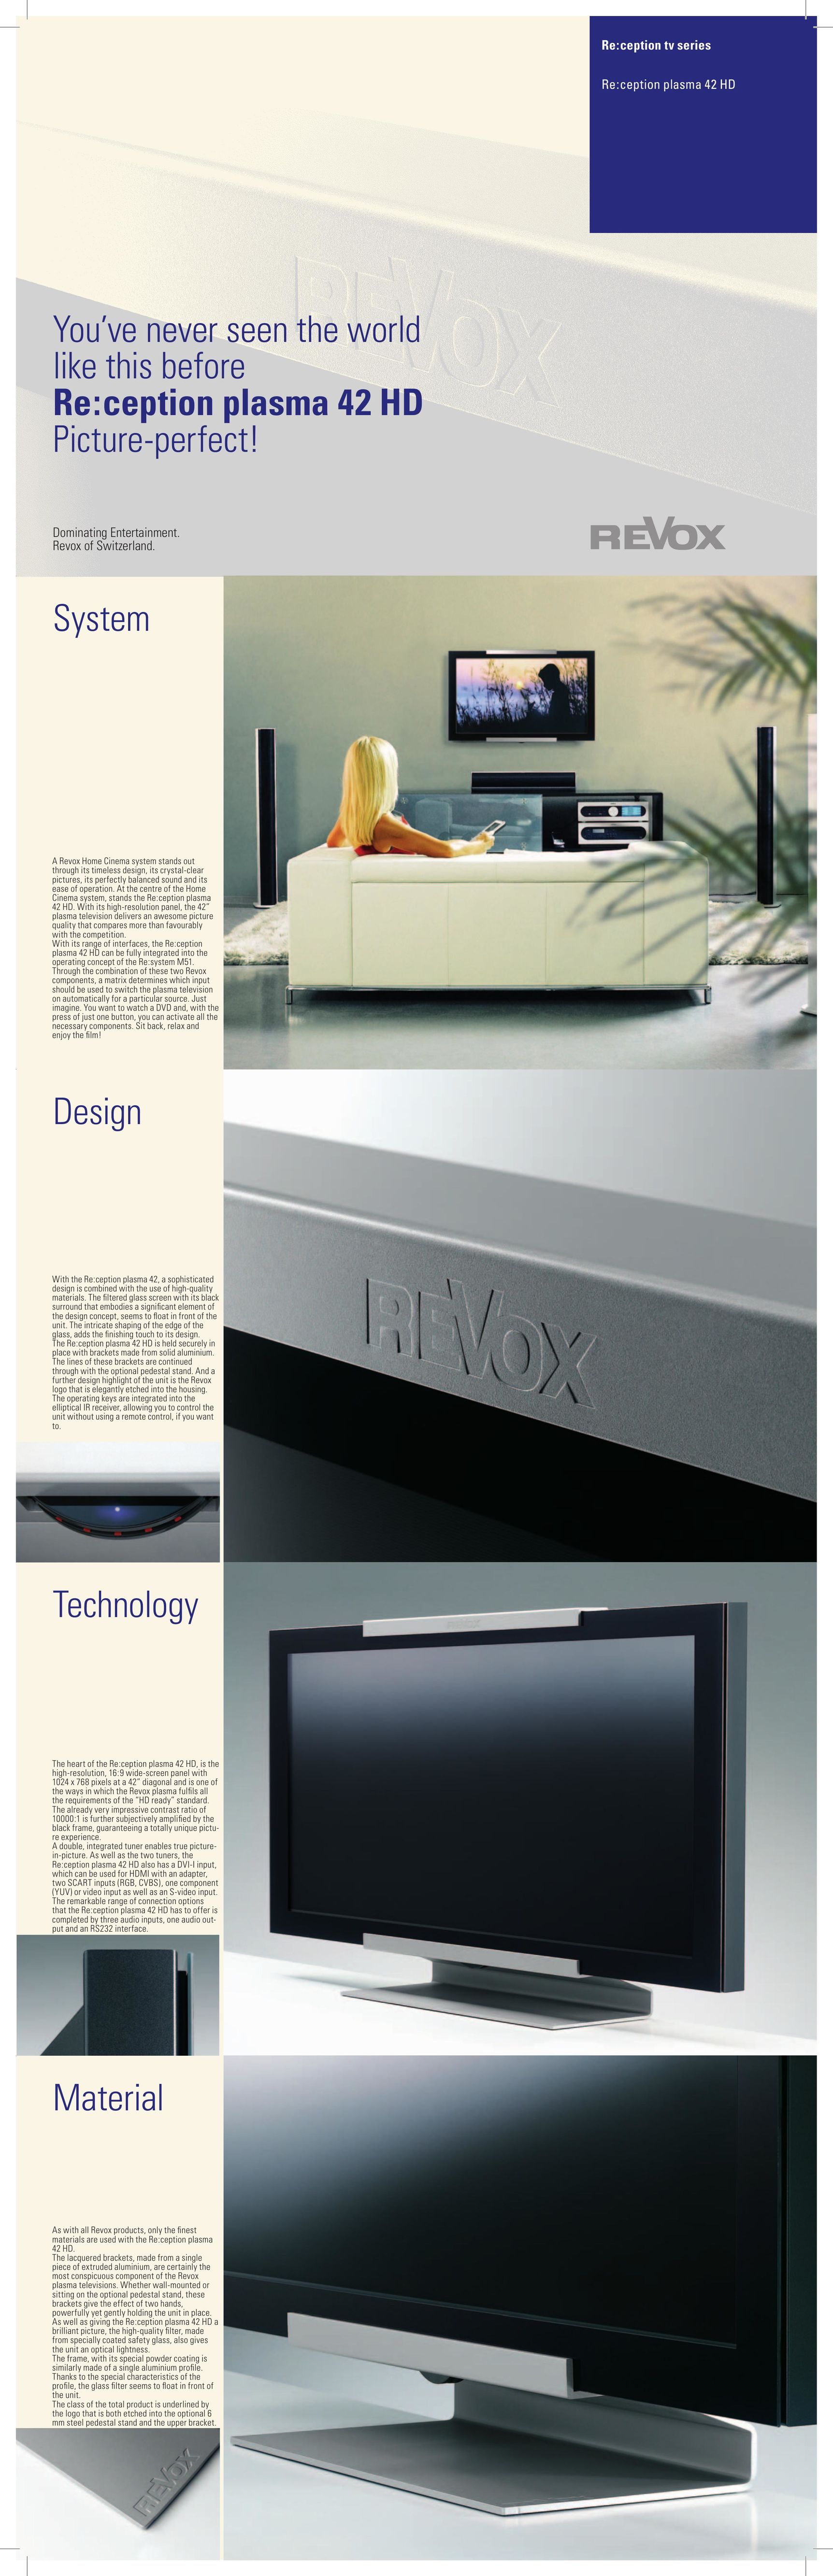 Revox Plasma HD Flat Panel Television User Manual